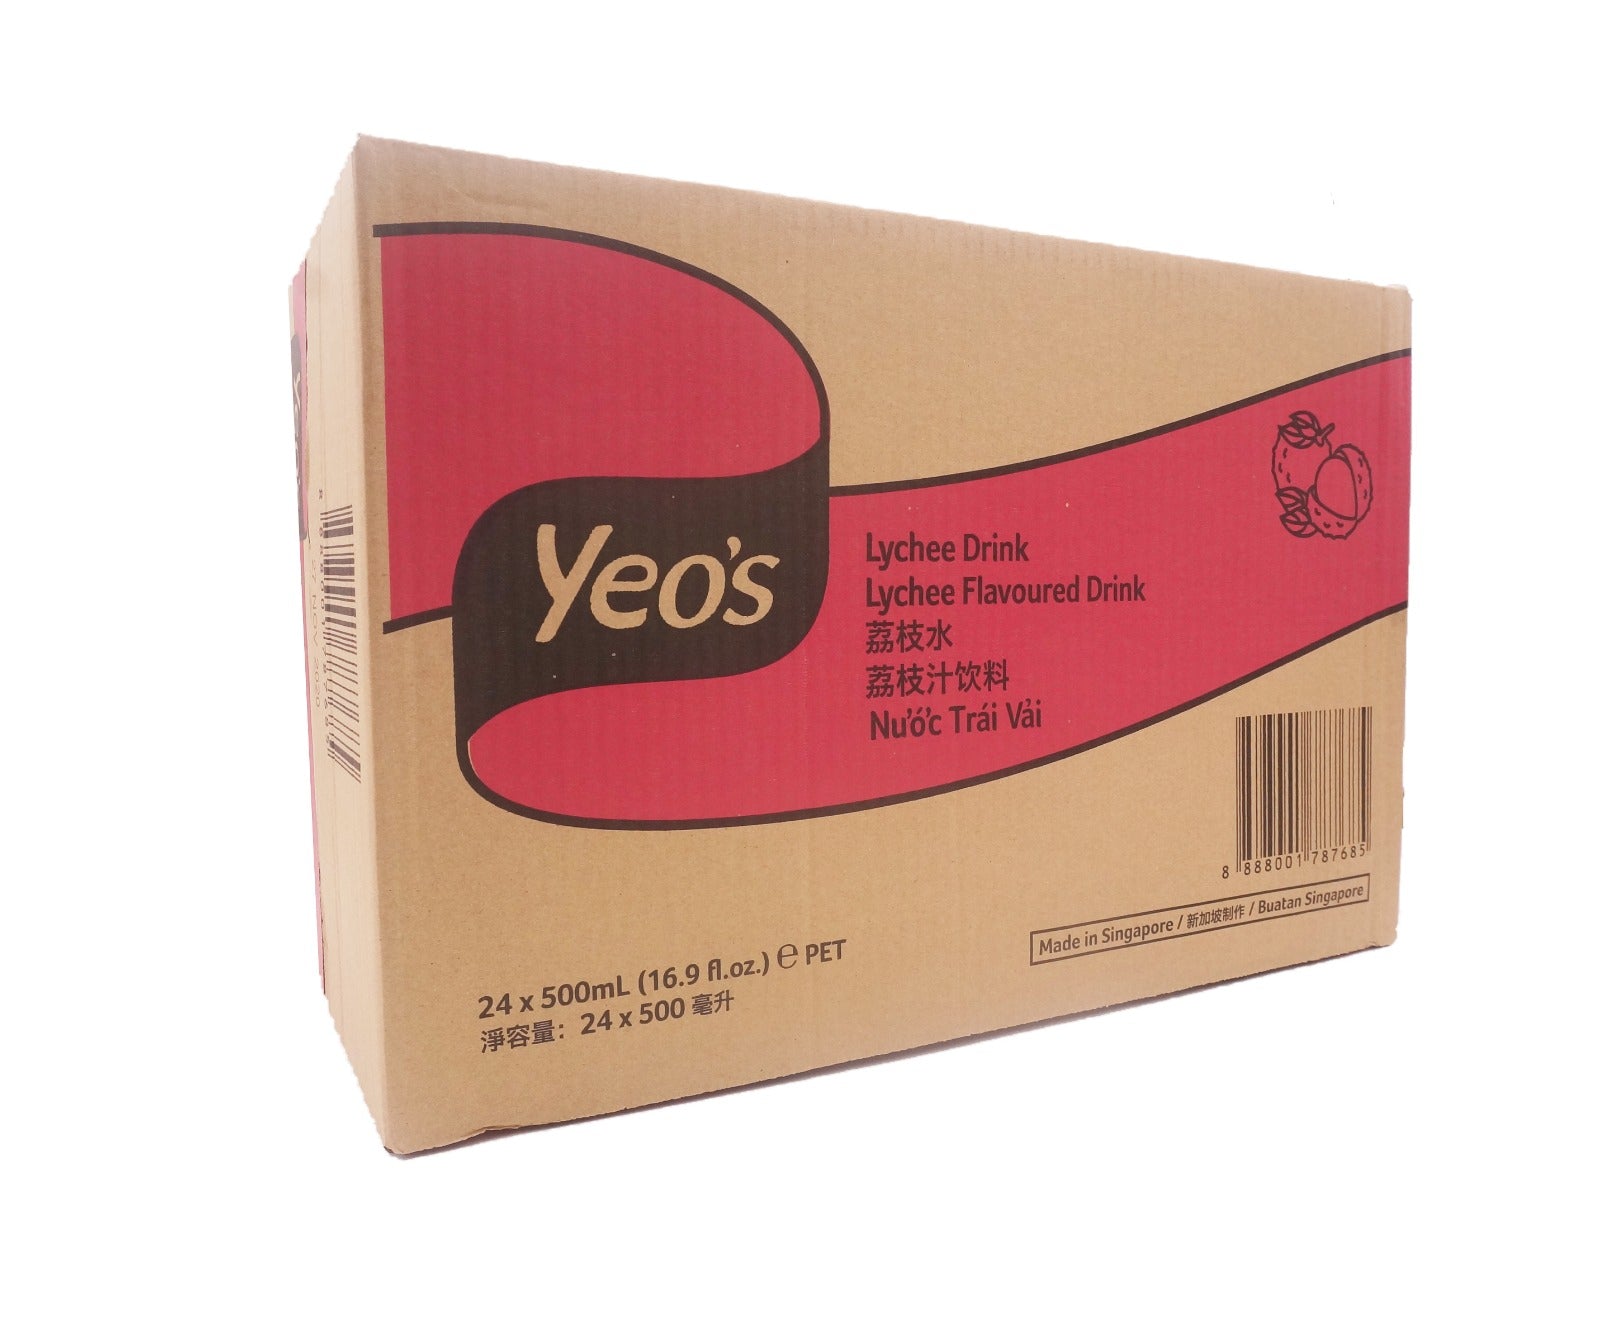 Yeos Lychee Drink Bottle (24 x 500ml - Carton)